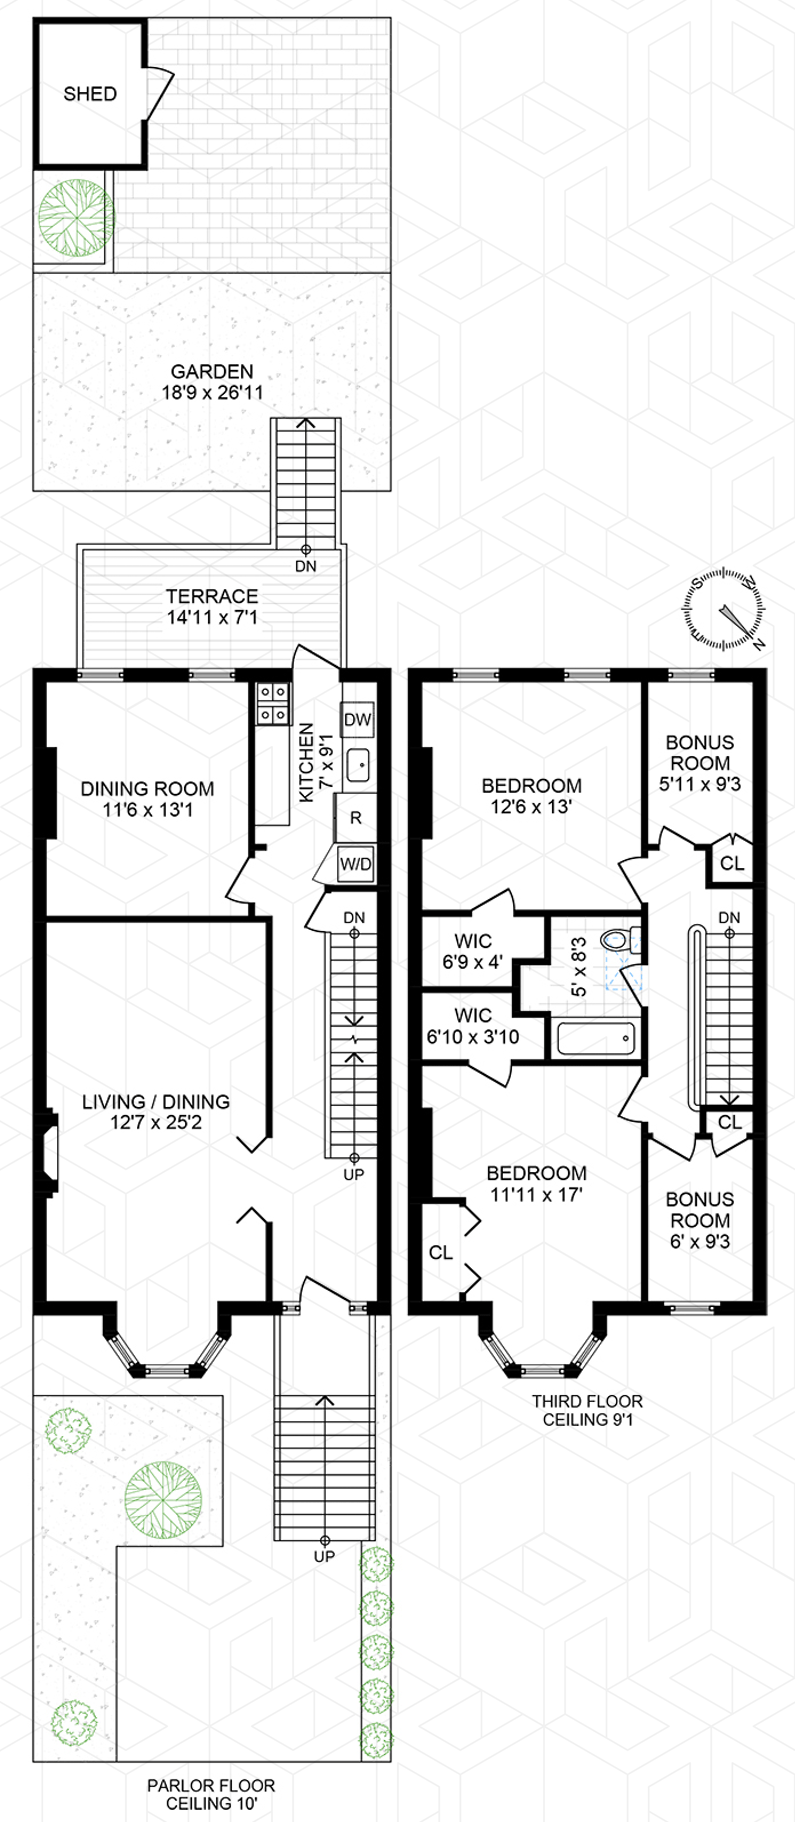 Floorplan for 87 Magnolia Ave, 2